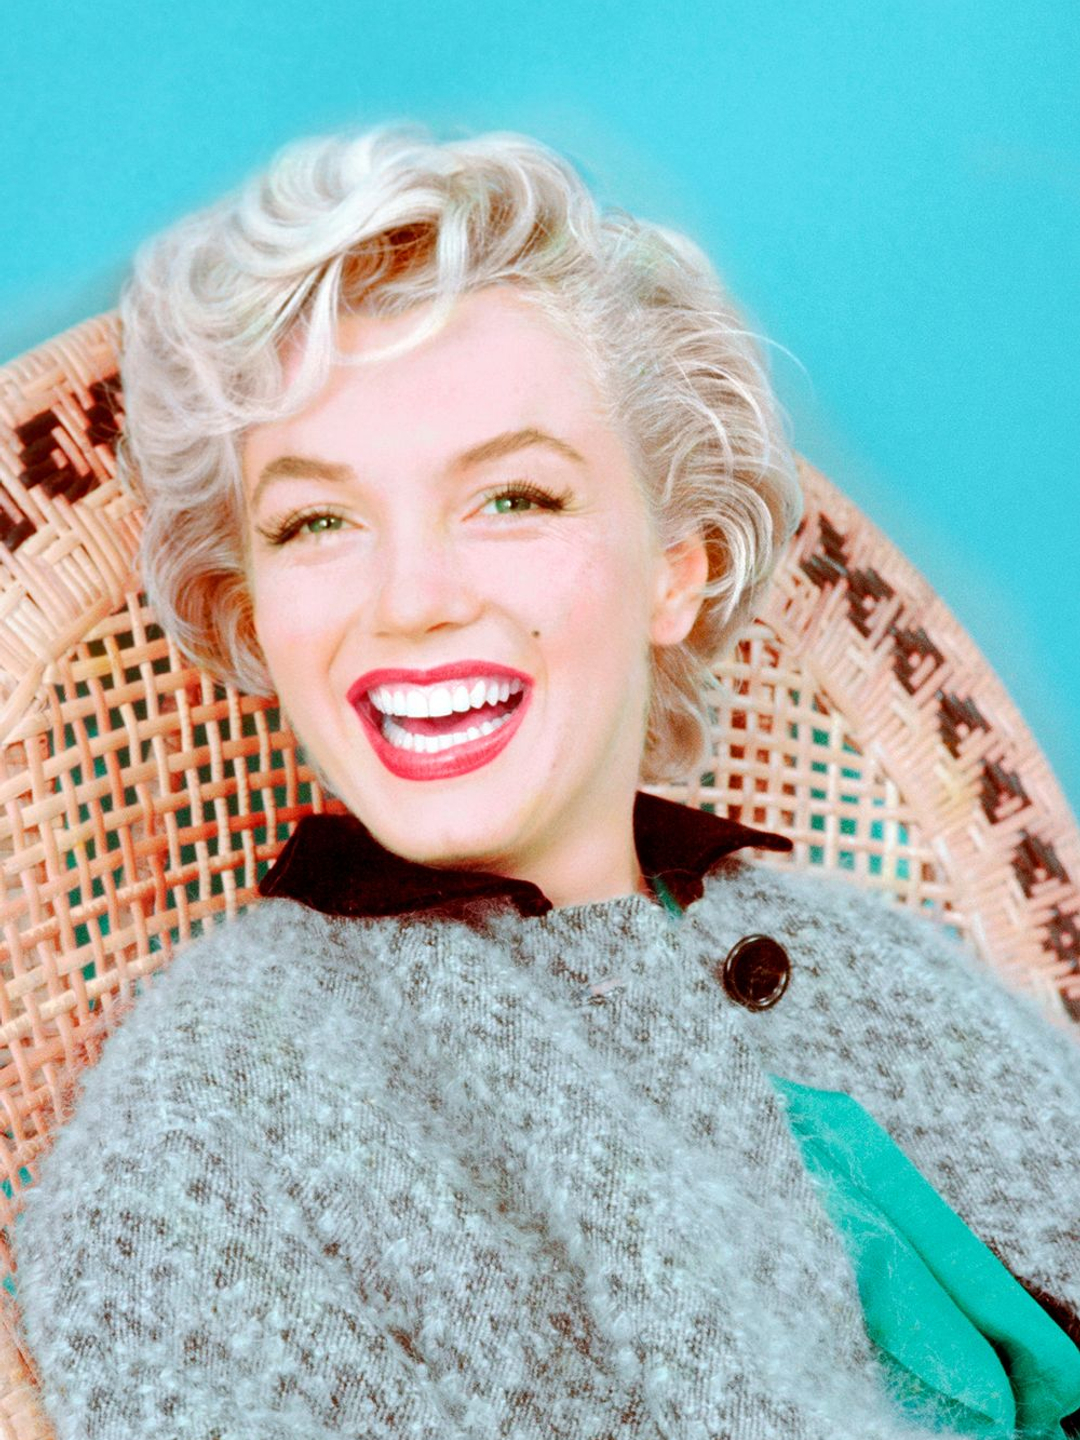 Marilyn Monroe biography